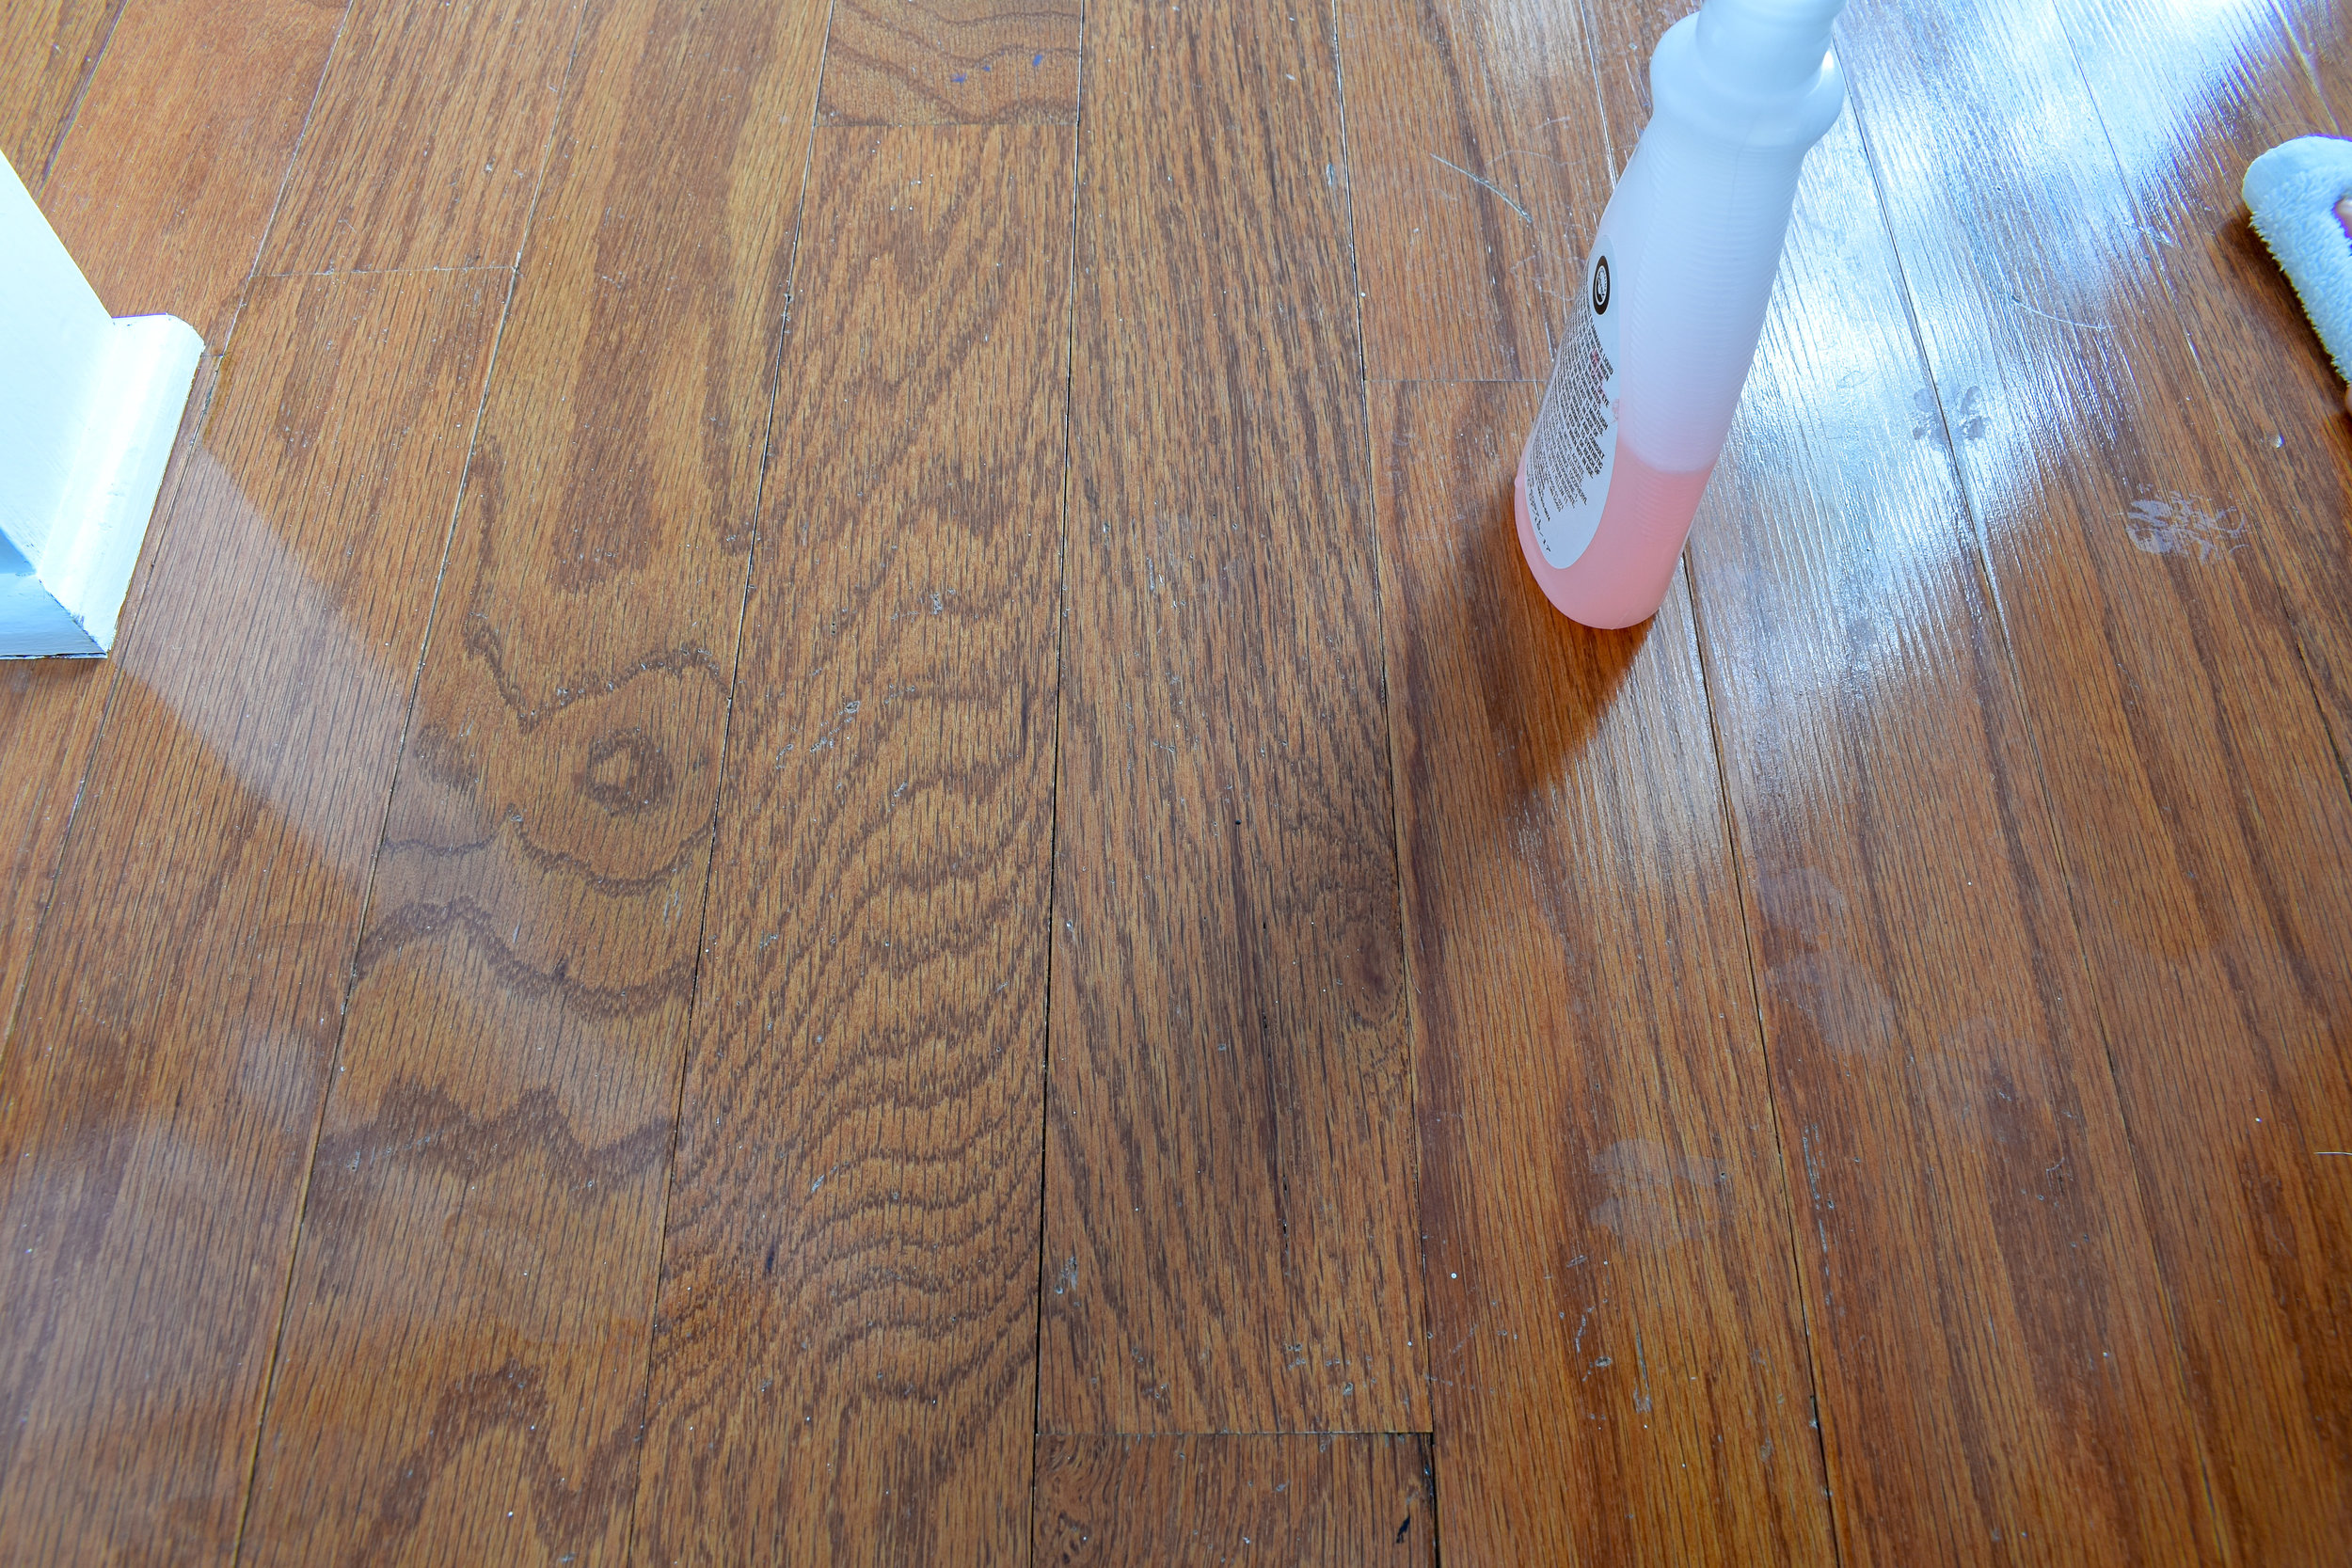 How To Make Old Hardwood Floors Shine, How To Clean And Shine Hardwood Floors